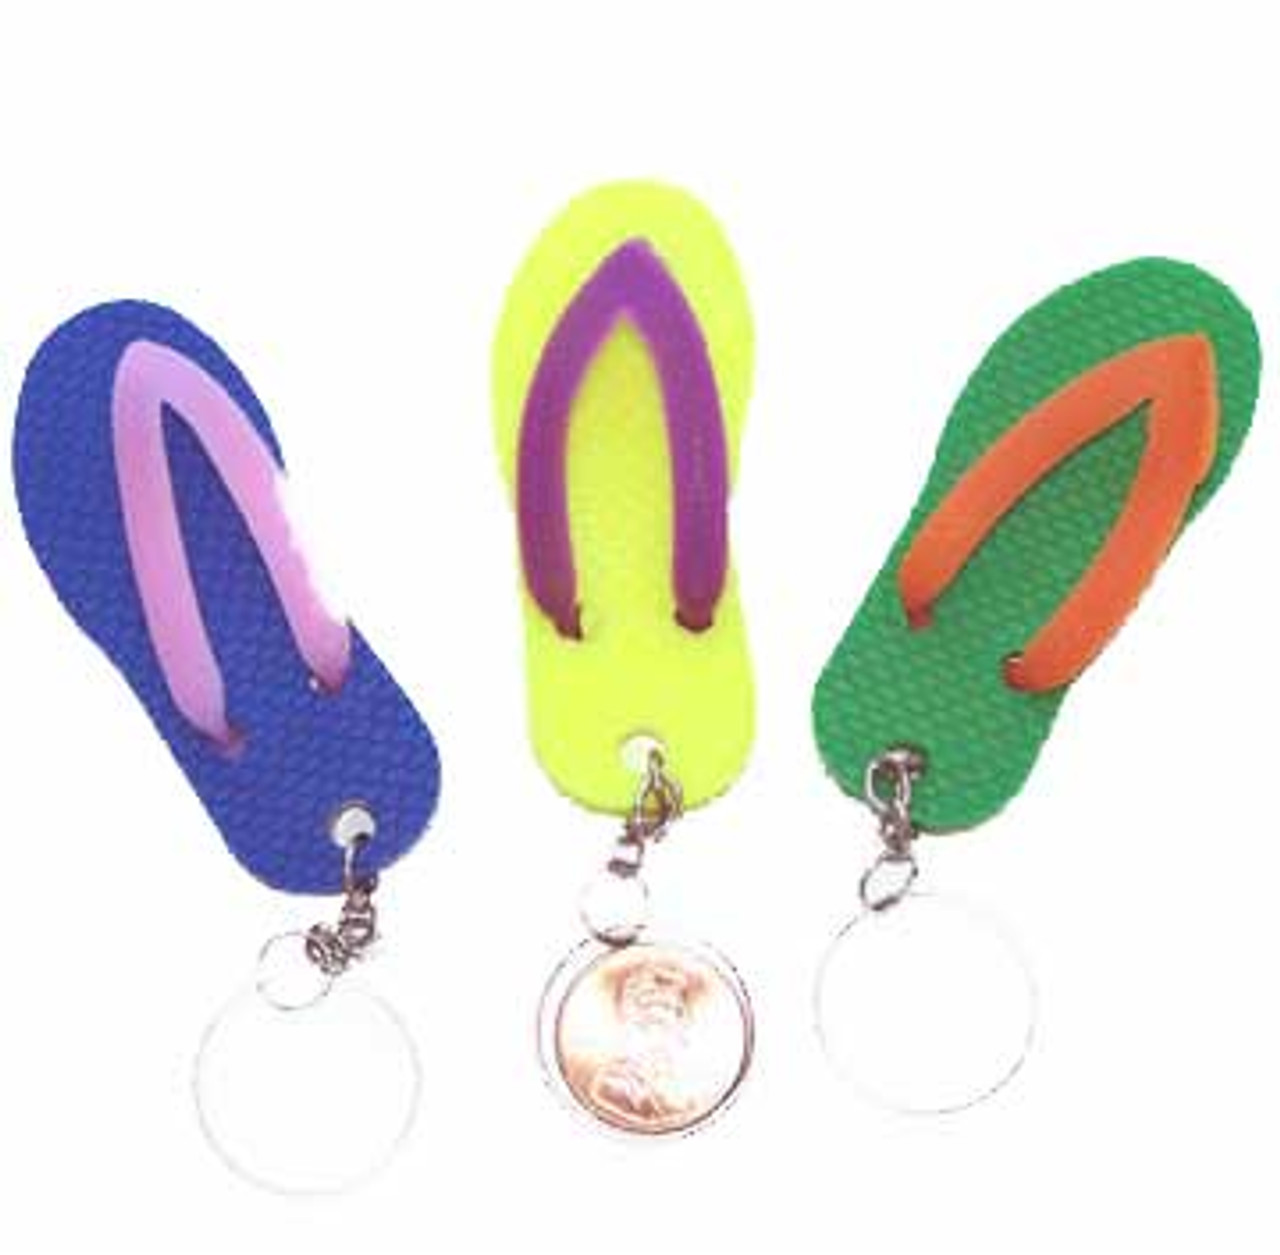 Plastic Mini Flip Flop Key Chain - Novelty Key Chain for Kids